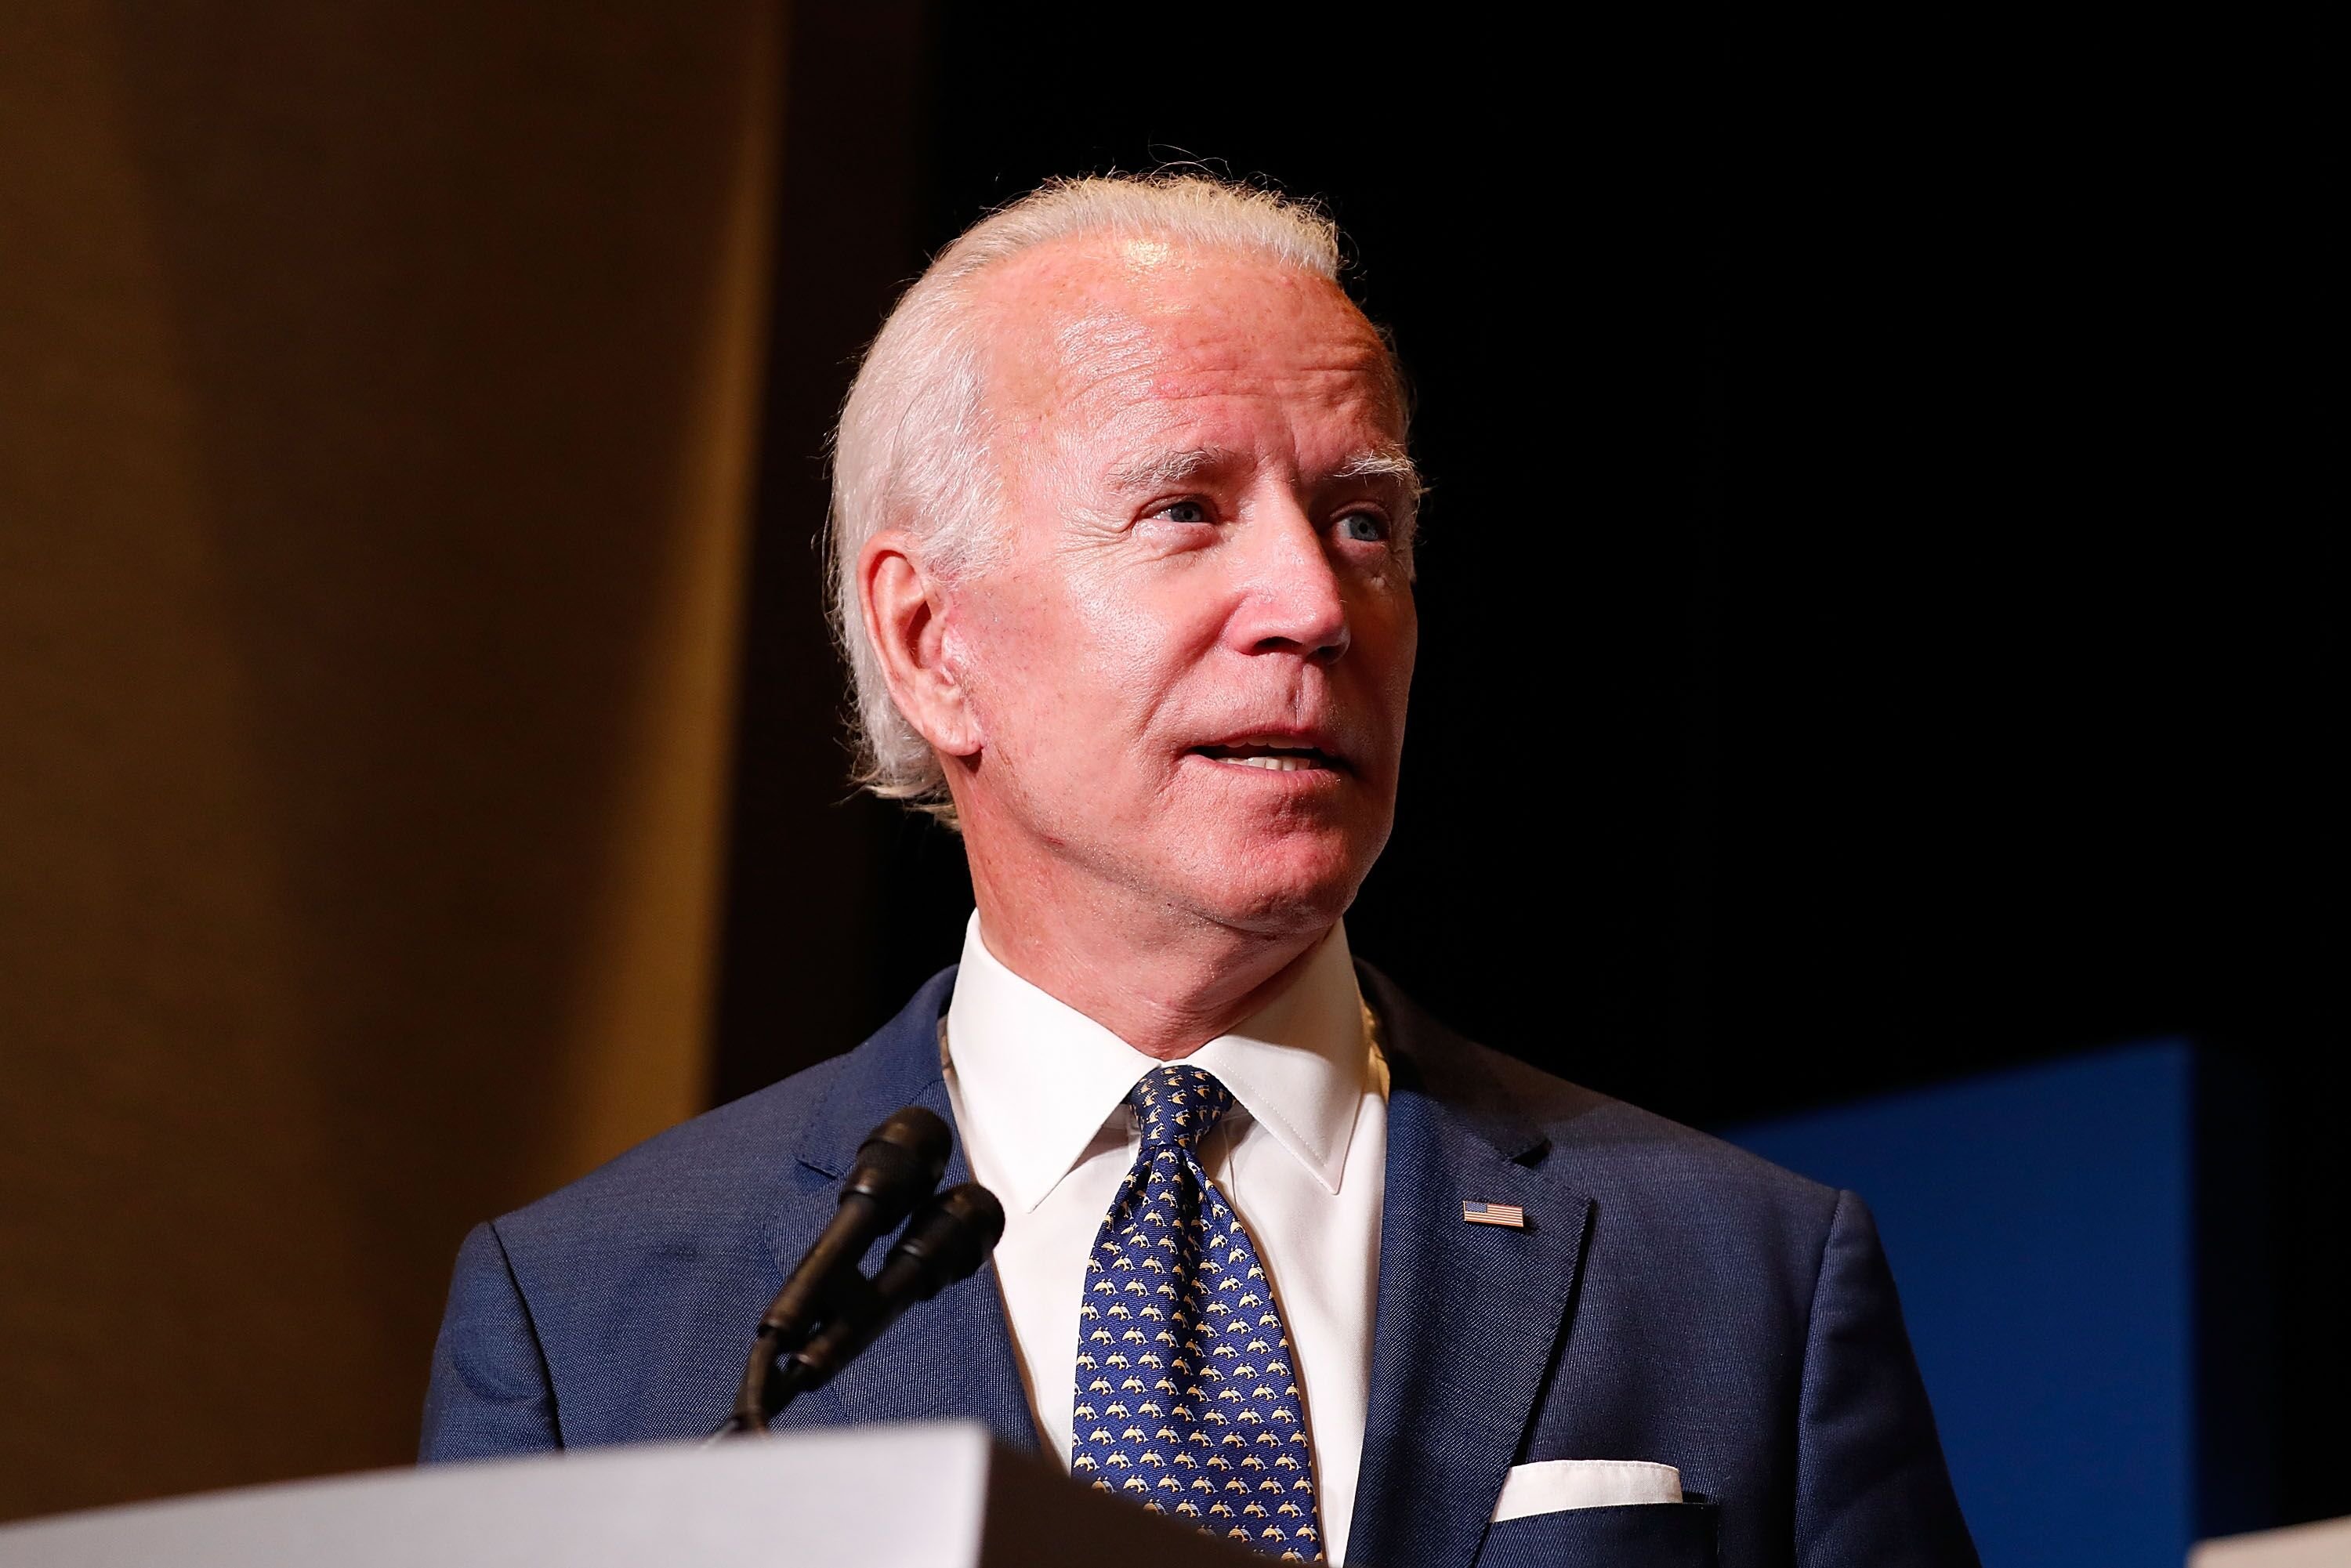 Joe Biden speaks on stage before an audience. | Source: Getty Images